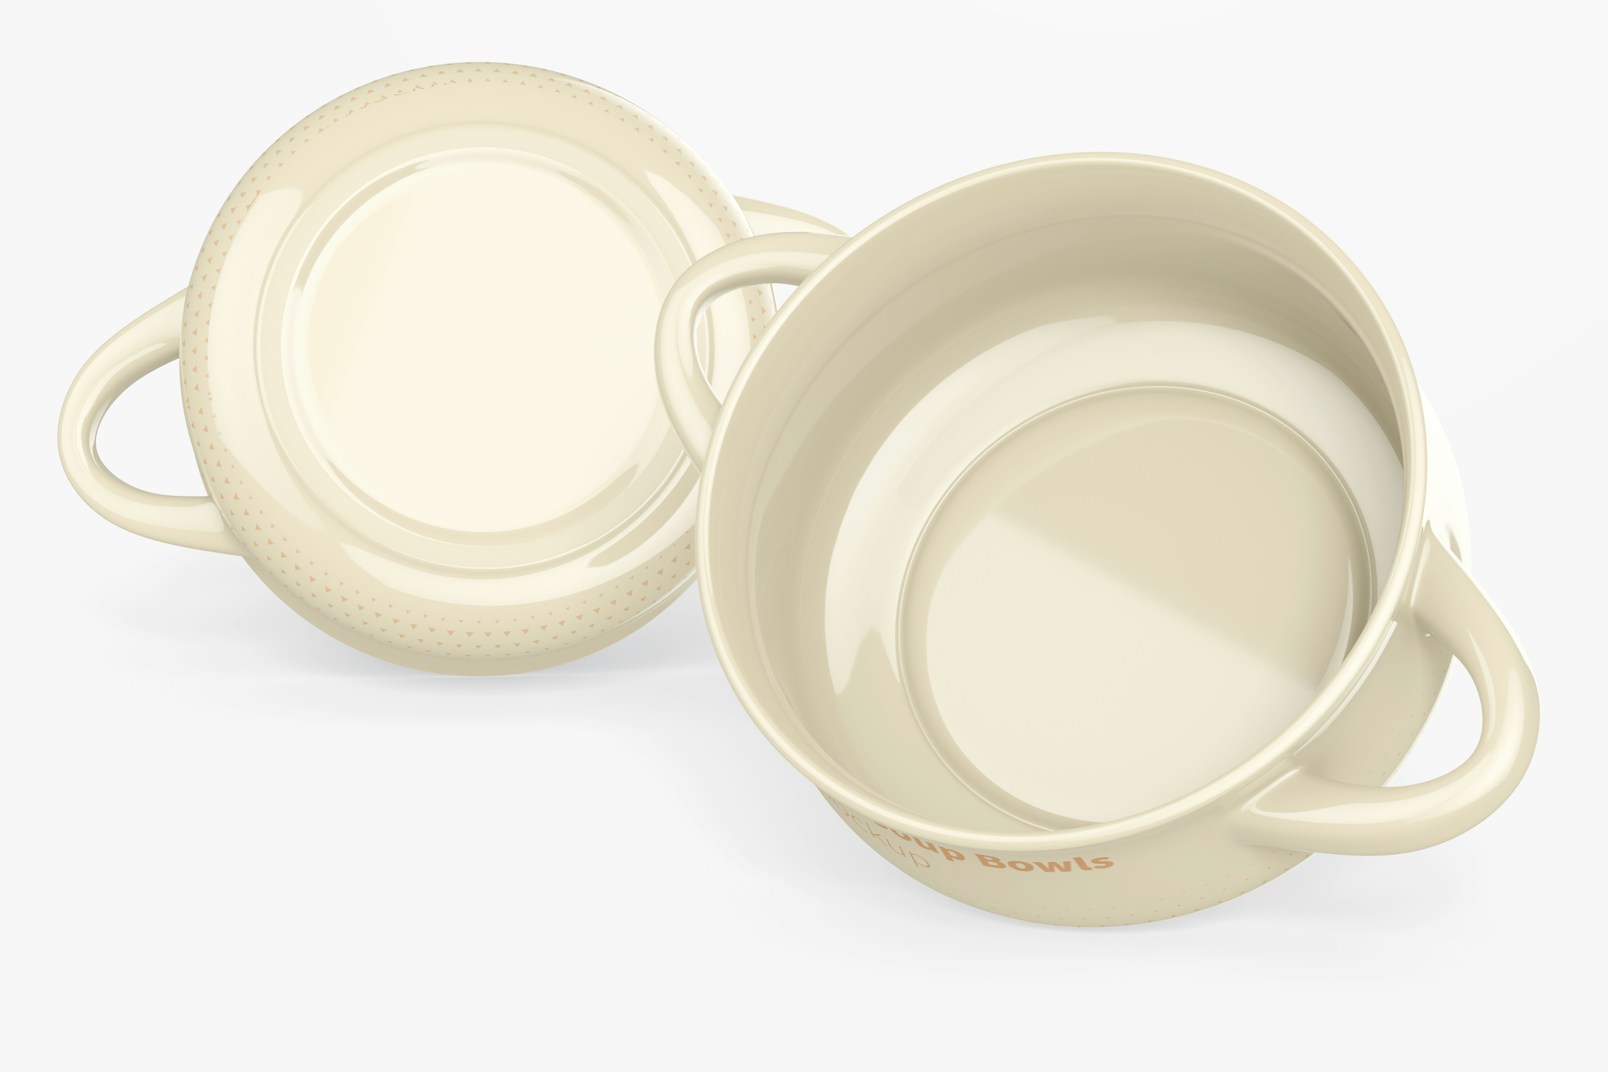 Ceramic Soup Bowls with Handles Mockup